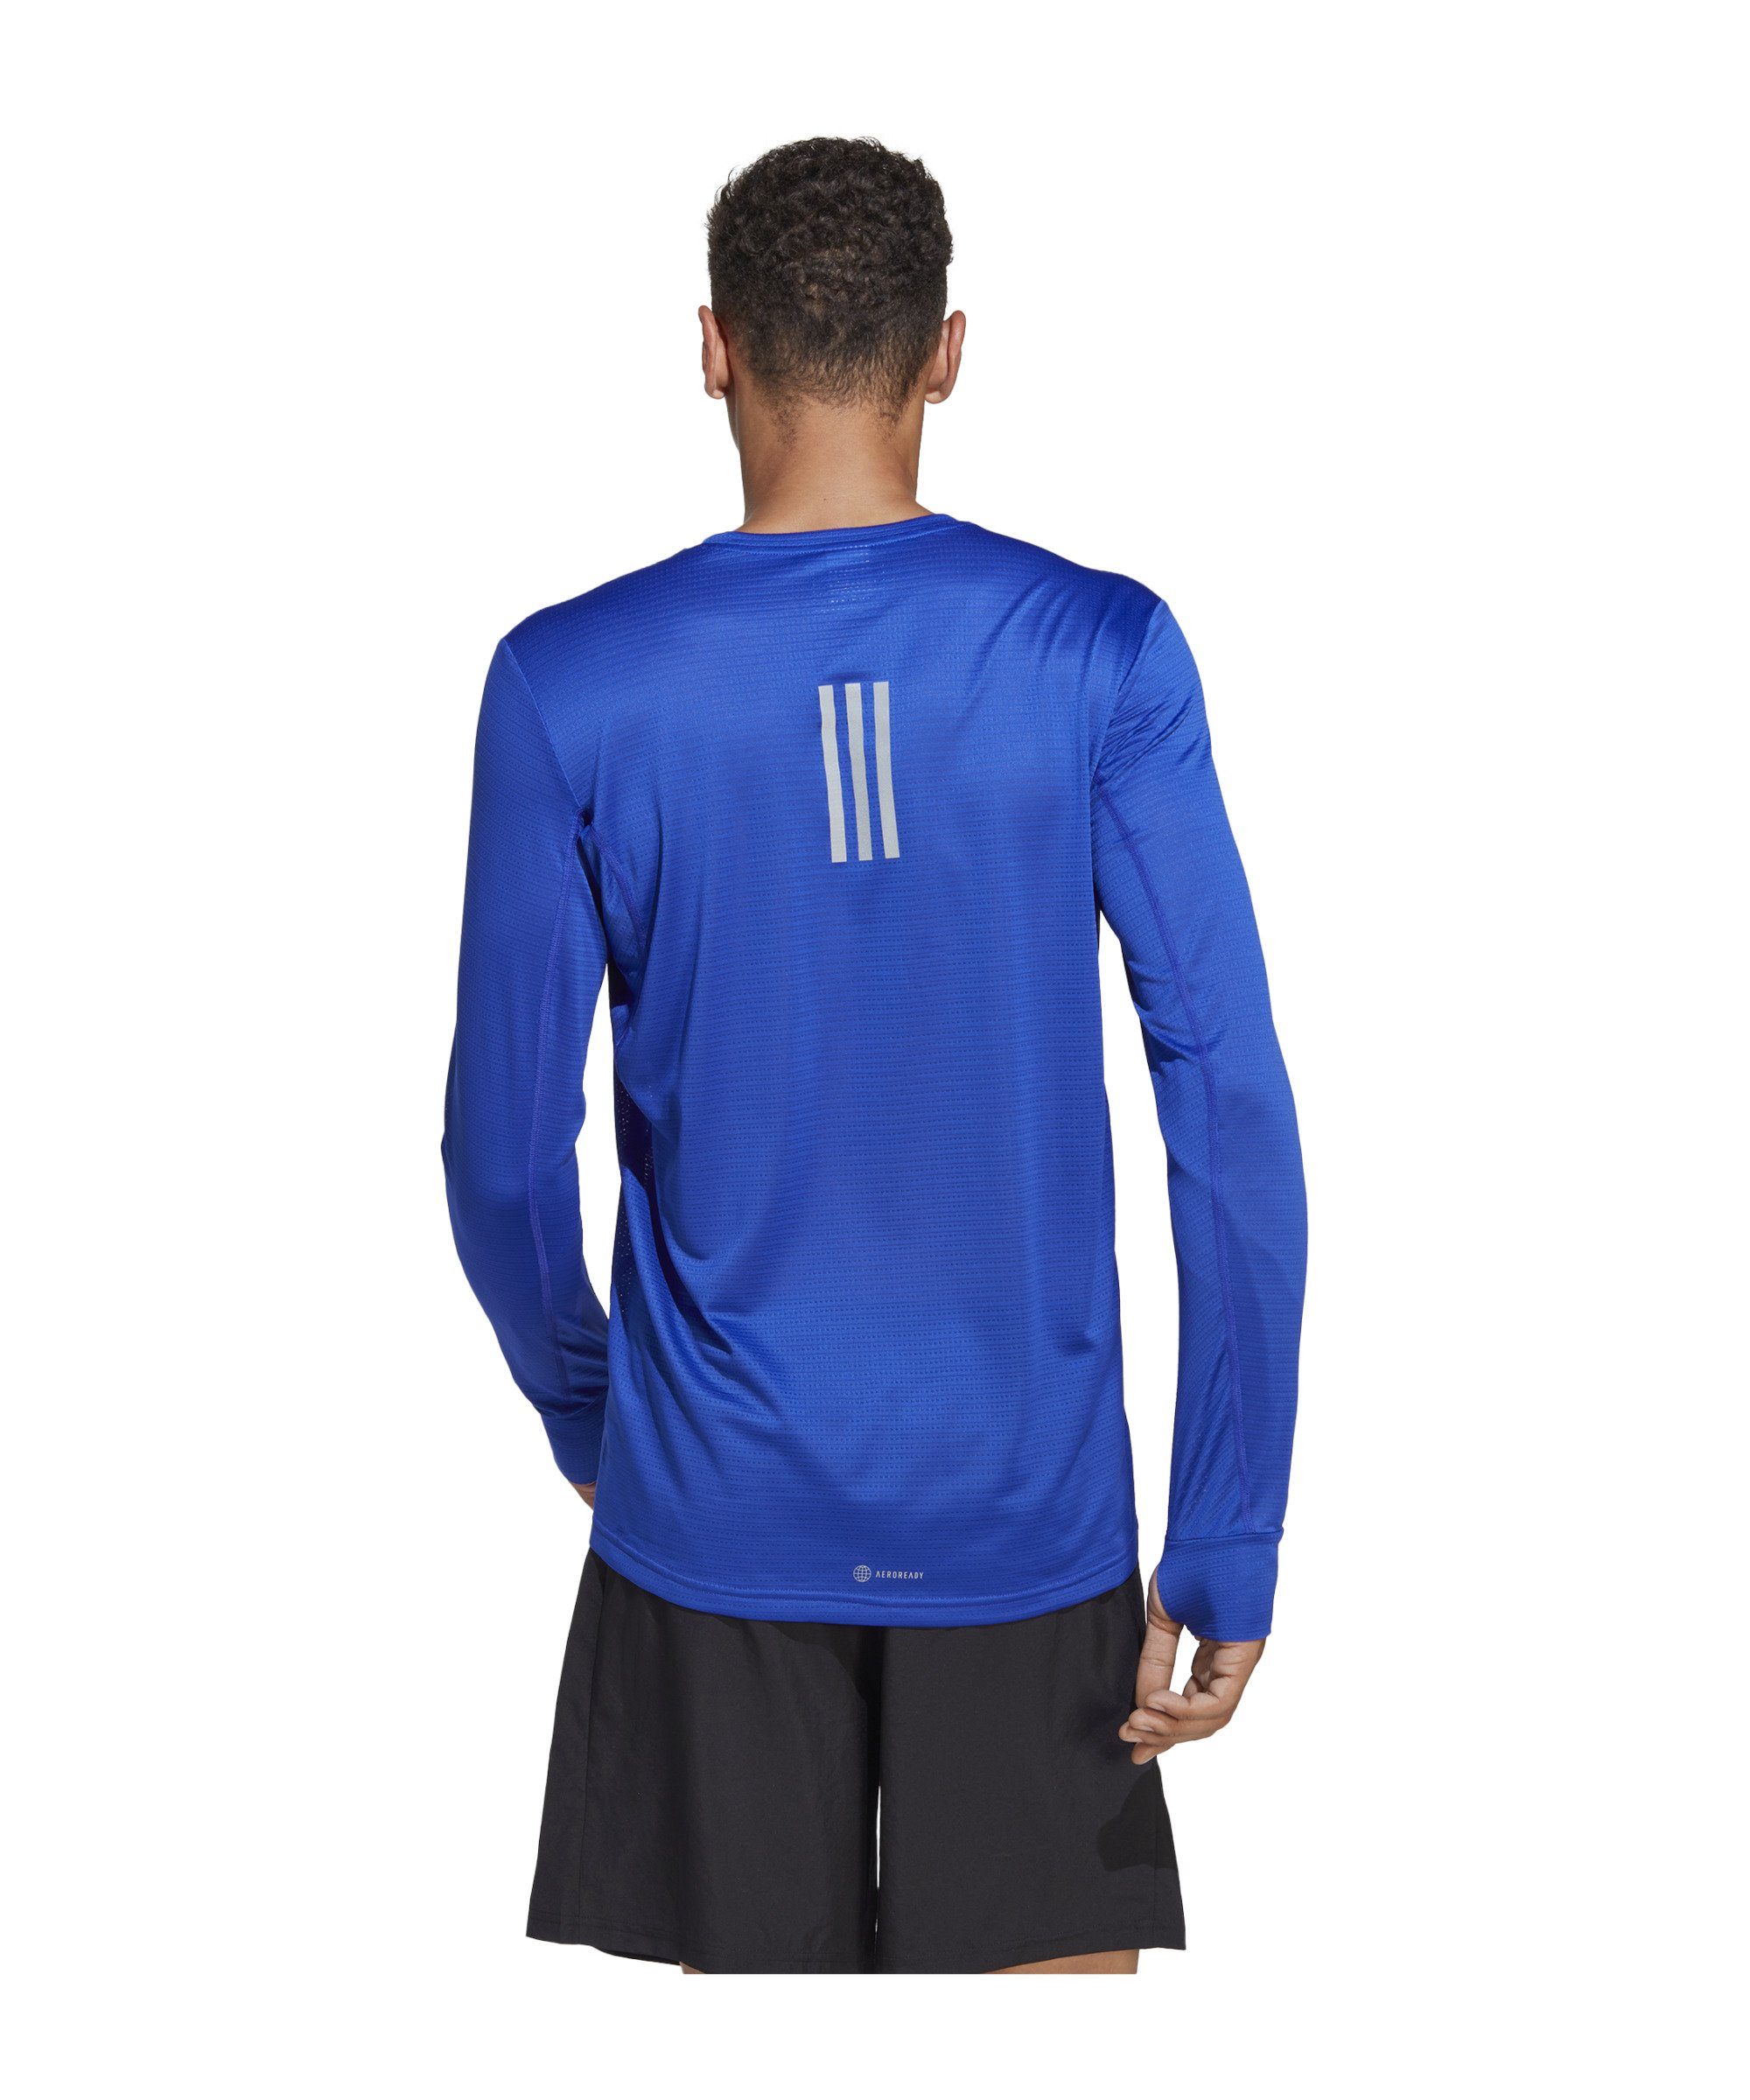 Own blau default Performance adidas the Sweatshirt Lauftop Run